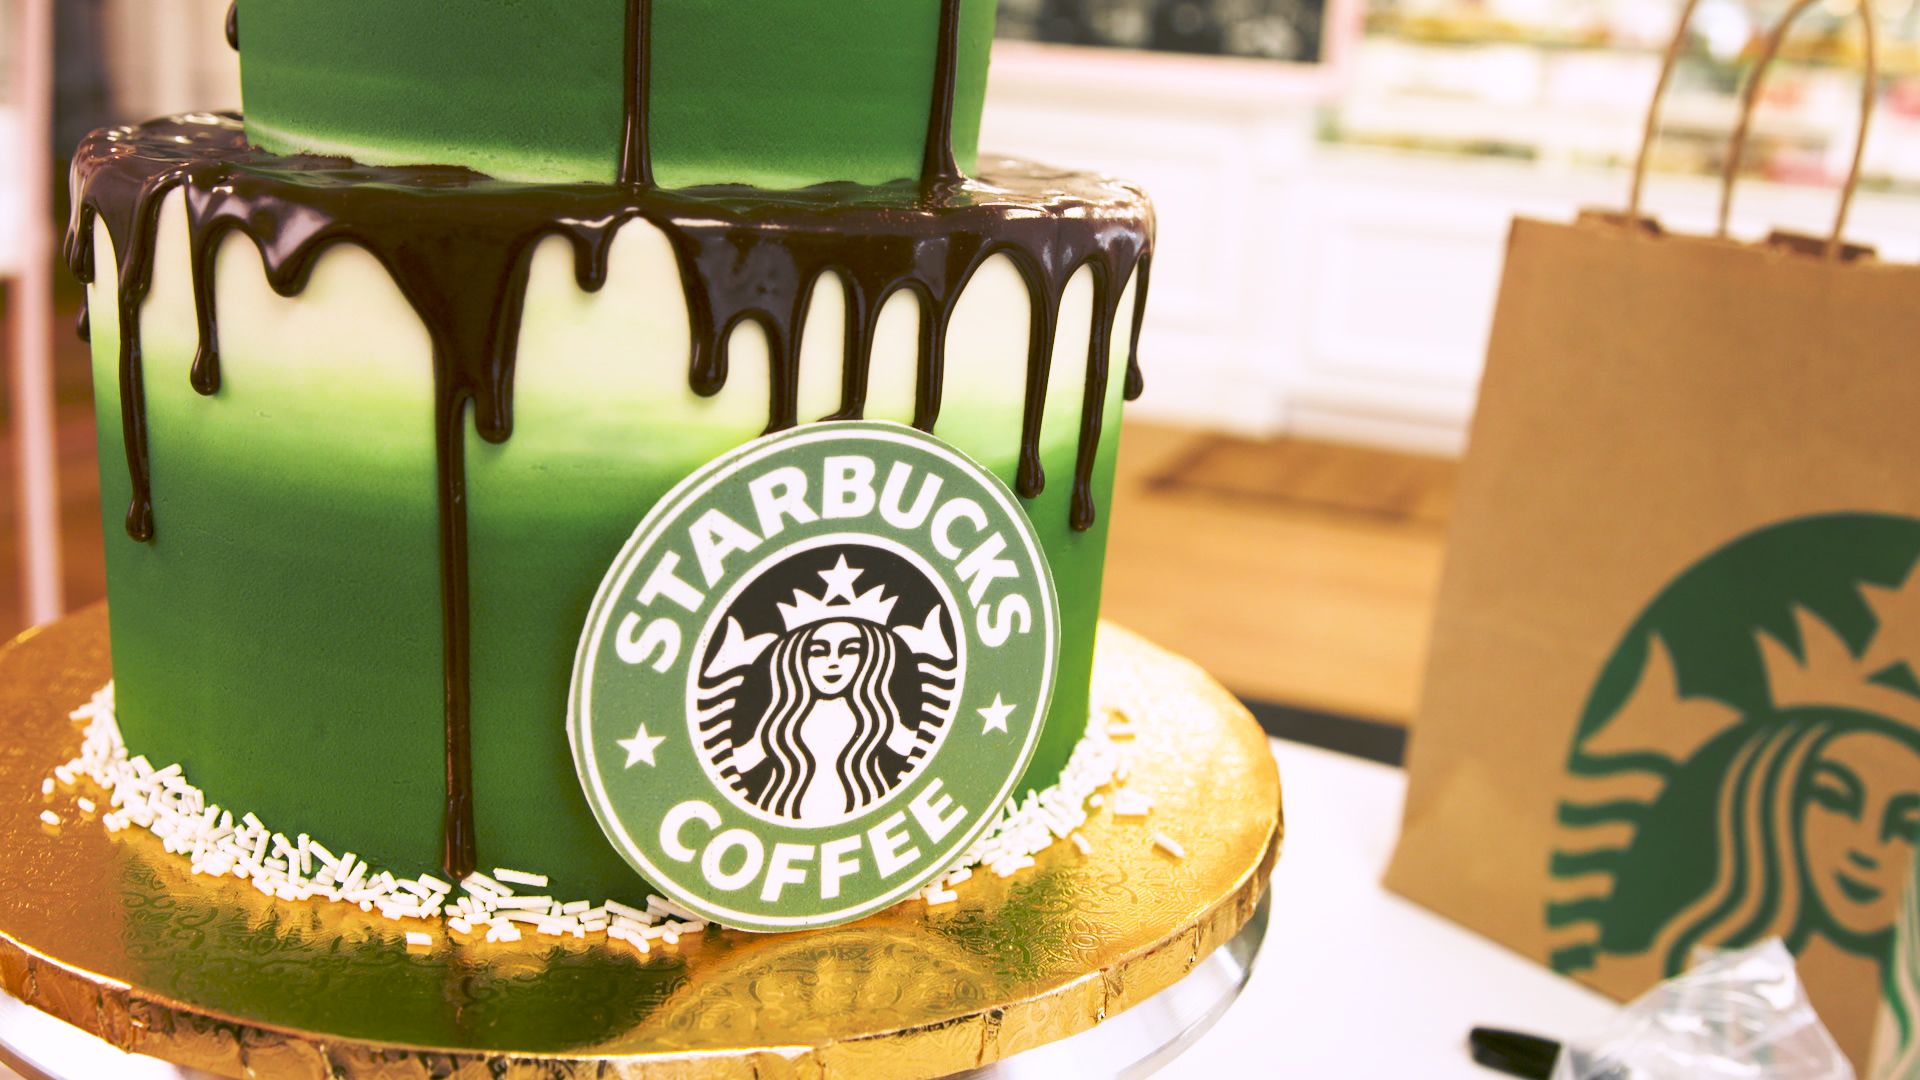 Order your birthday cake starbucks coffee online